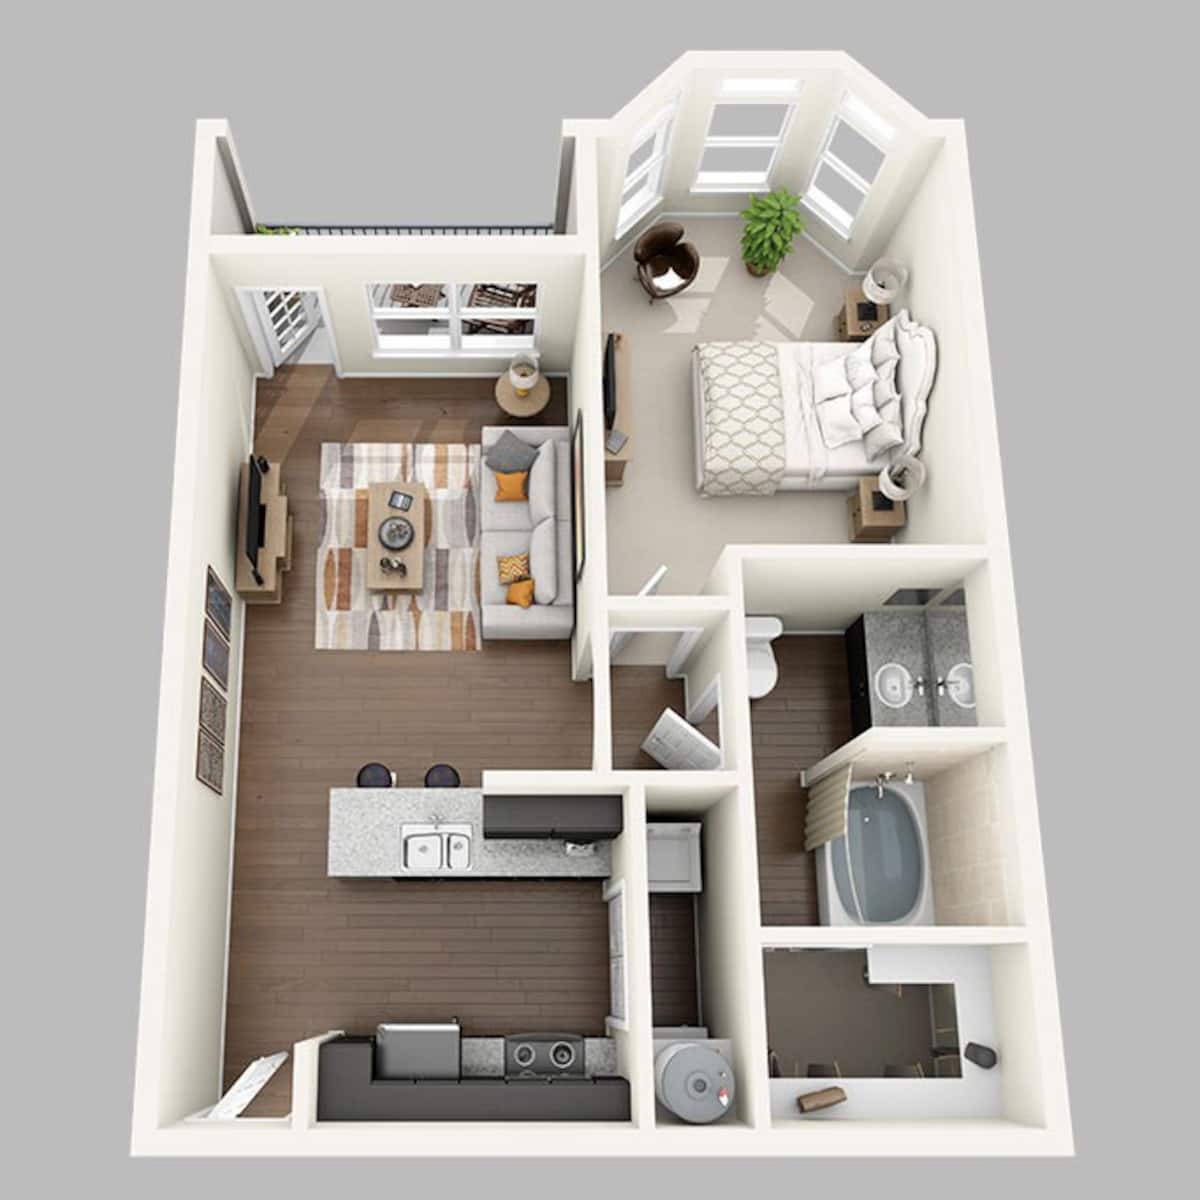 Floorplan diagram for A1, showing 1 bedroom